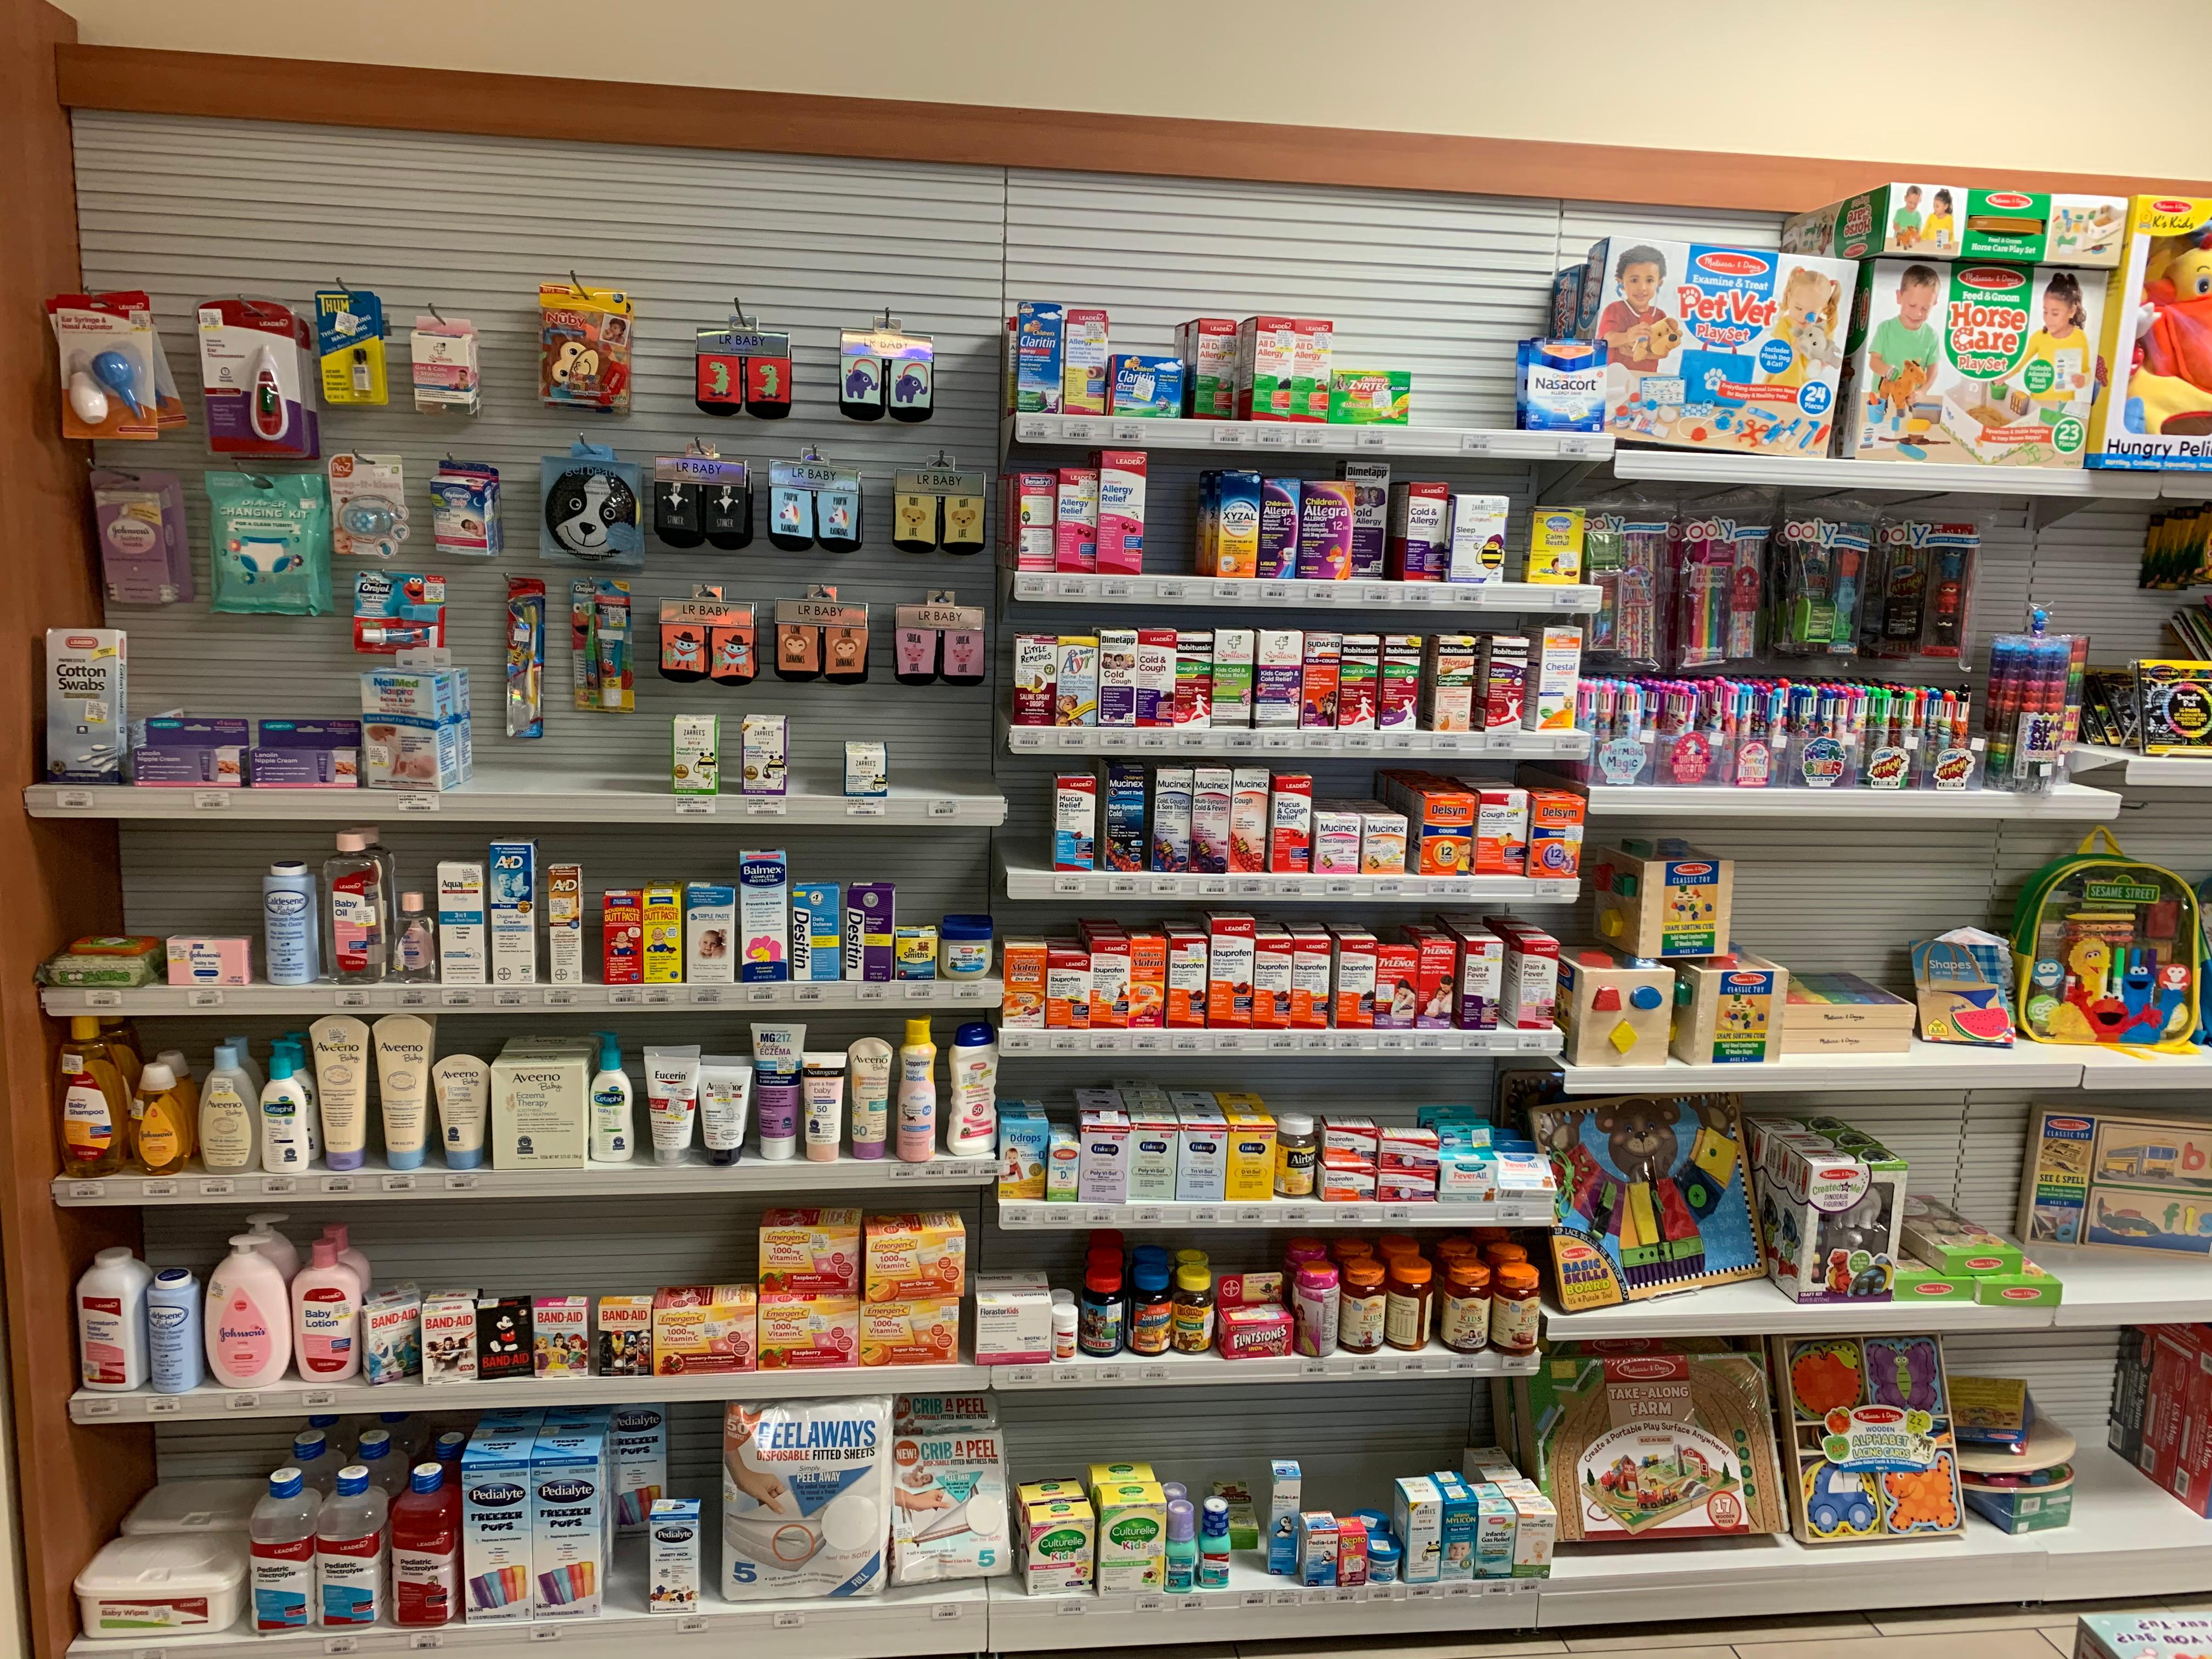 Baylor Scott & White Pharmacy #226 Shelf of Medicines